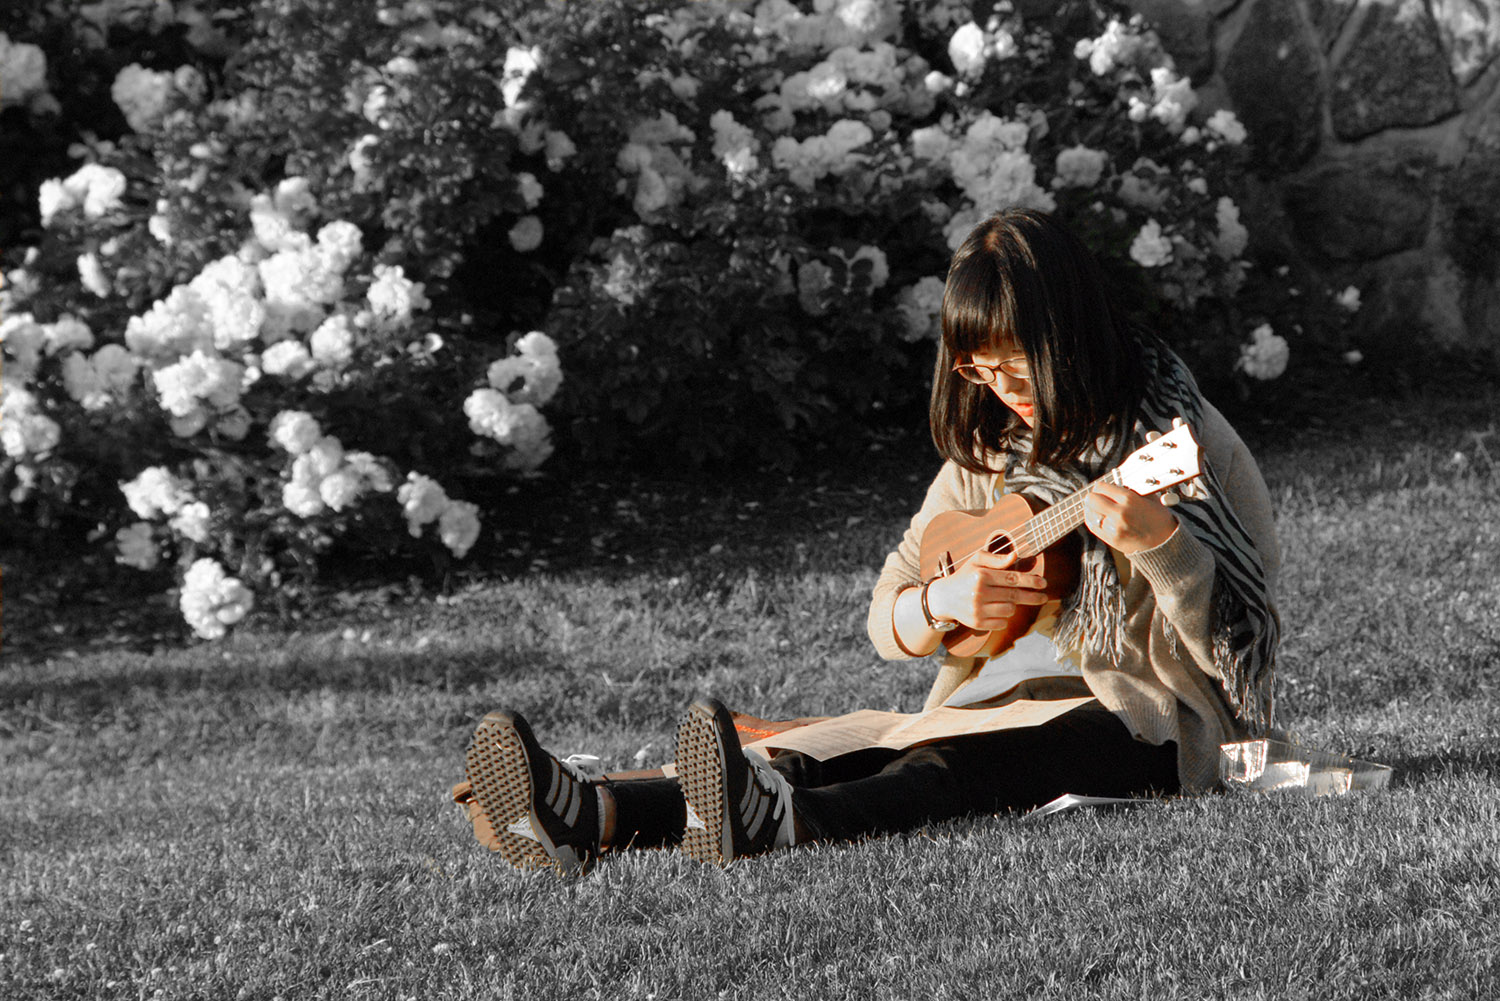 Musician_Teenager_Ukelele_Guitar_Sitting_Practice_Outdoors_Bellingham_Washington.jpg